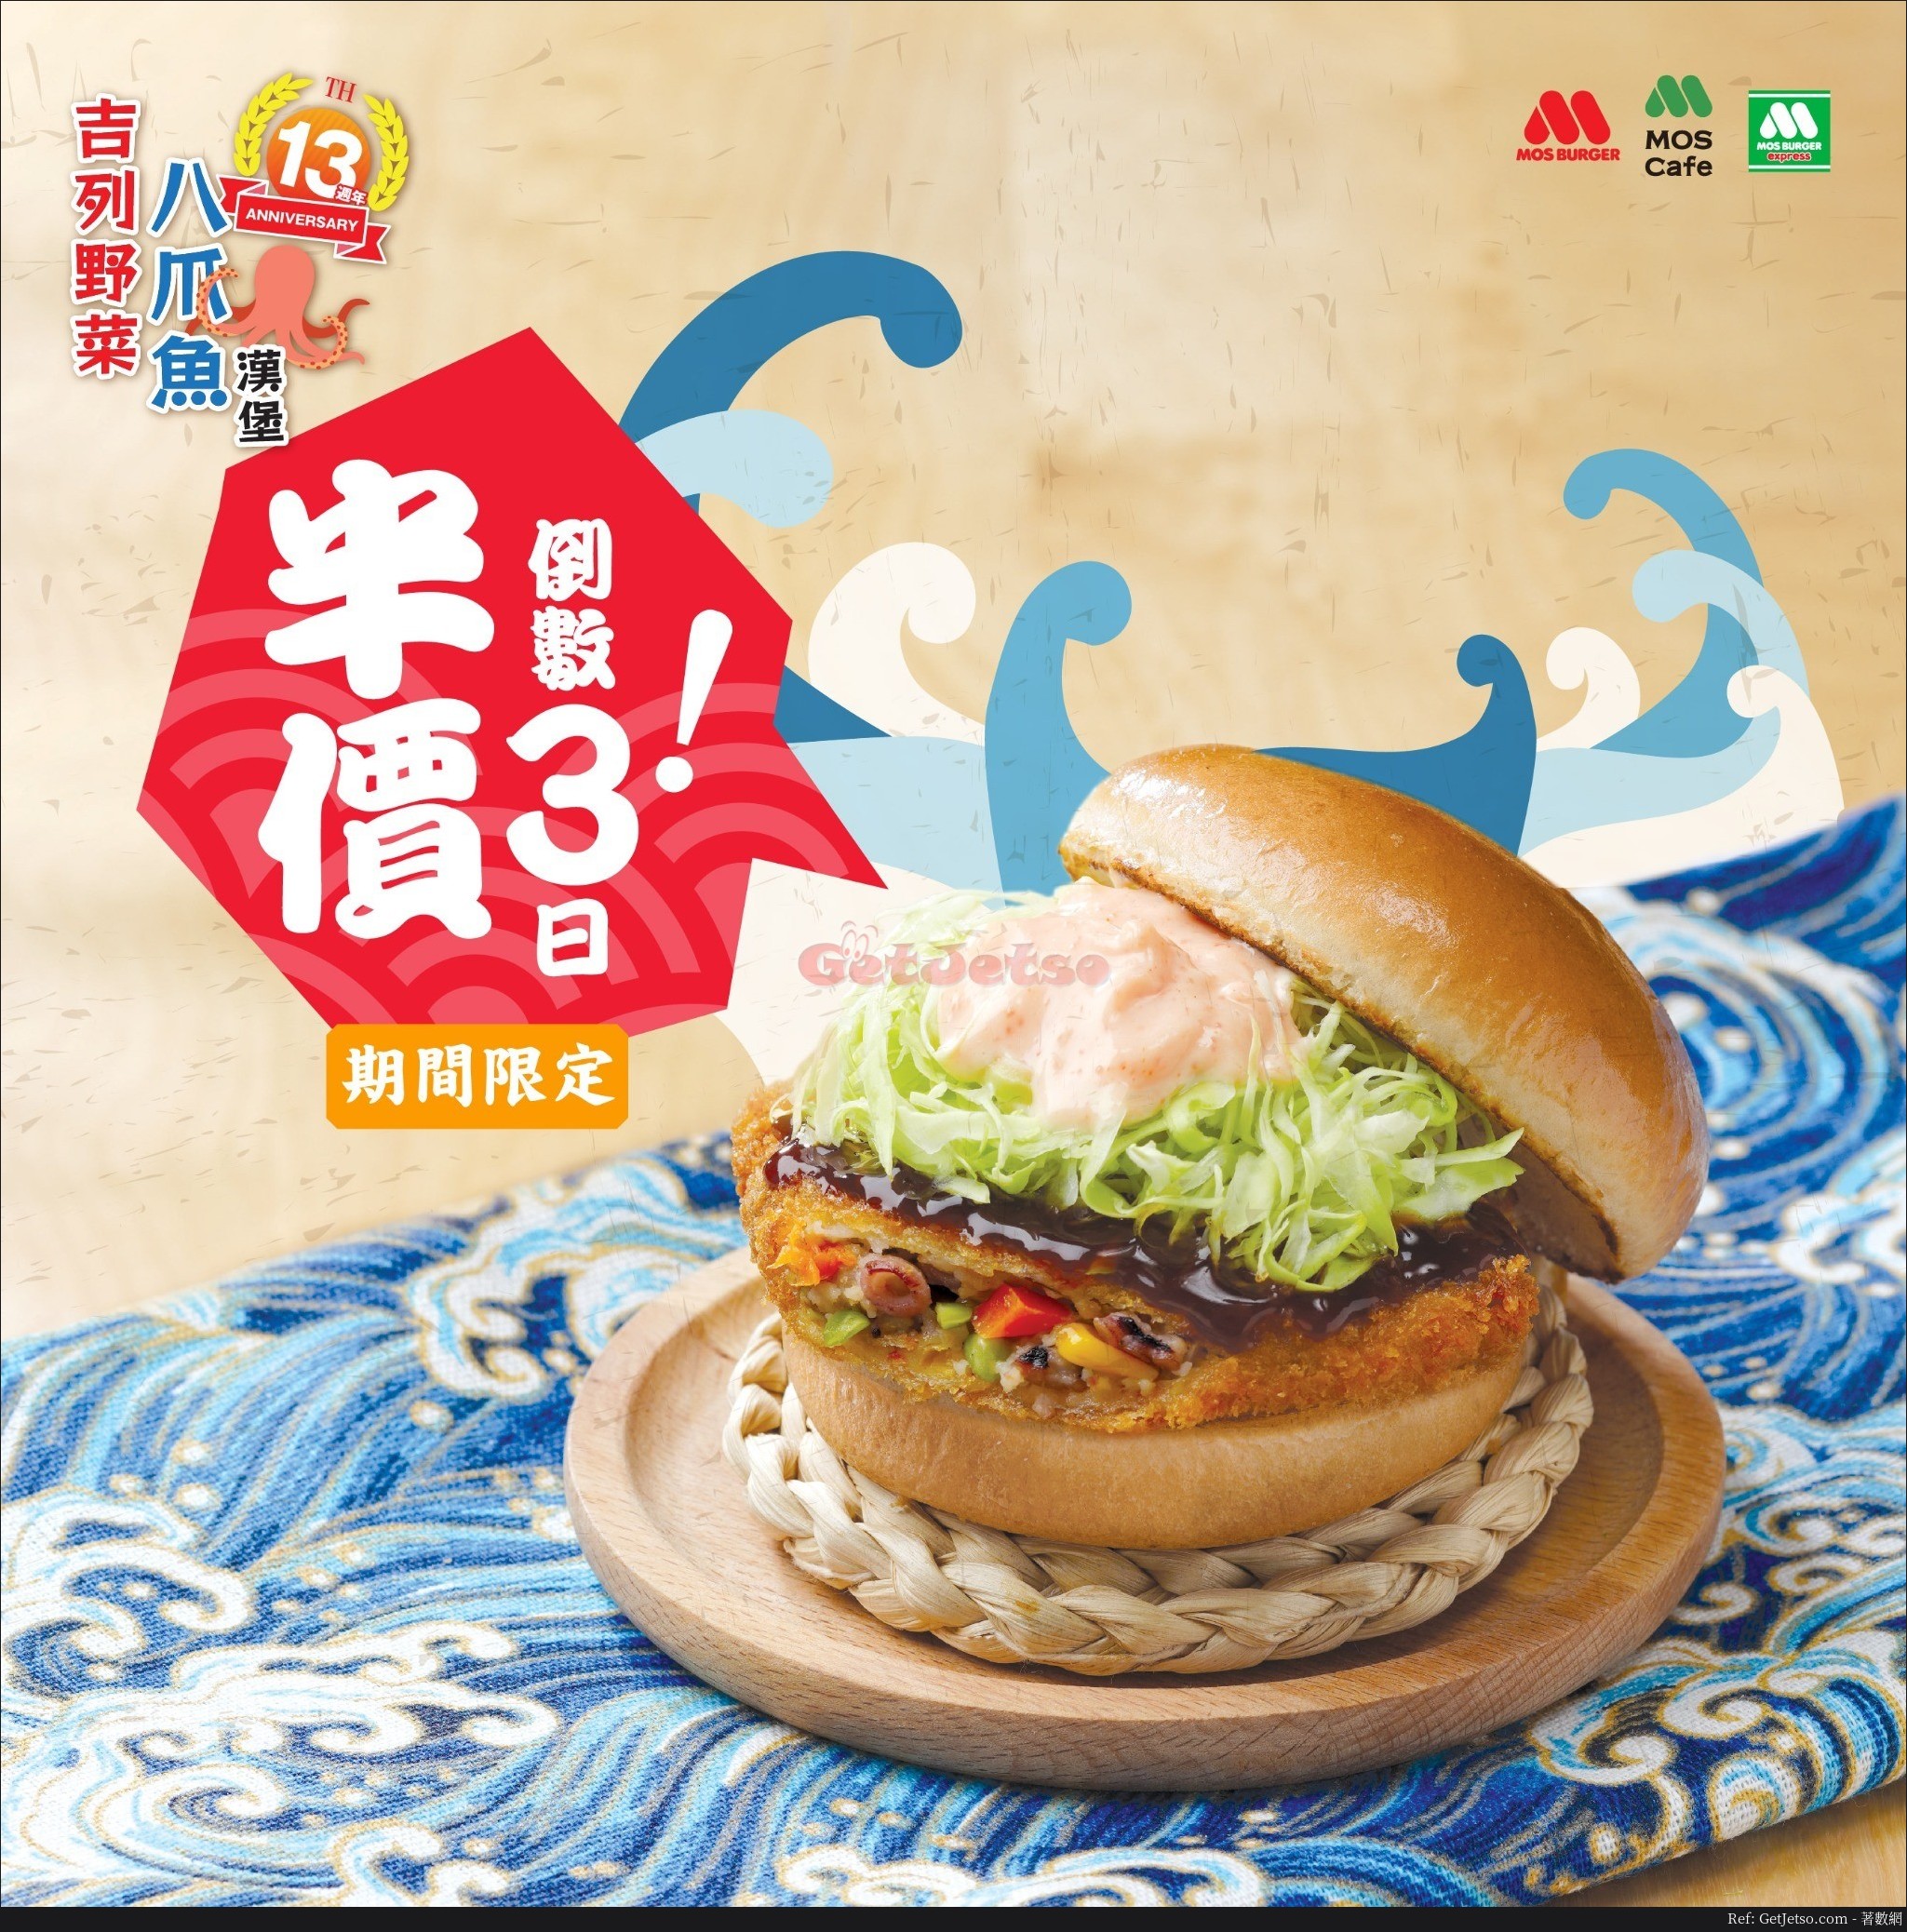 MOS Burger、MOS Café吉列野菜八爪魚漢堡 優惠(19年10月16-20日)圖片1